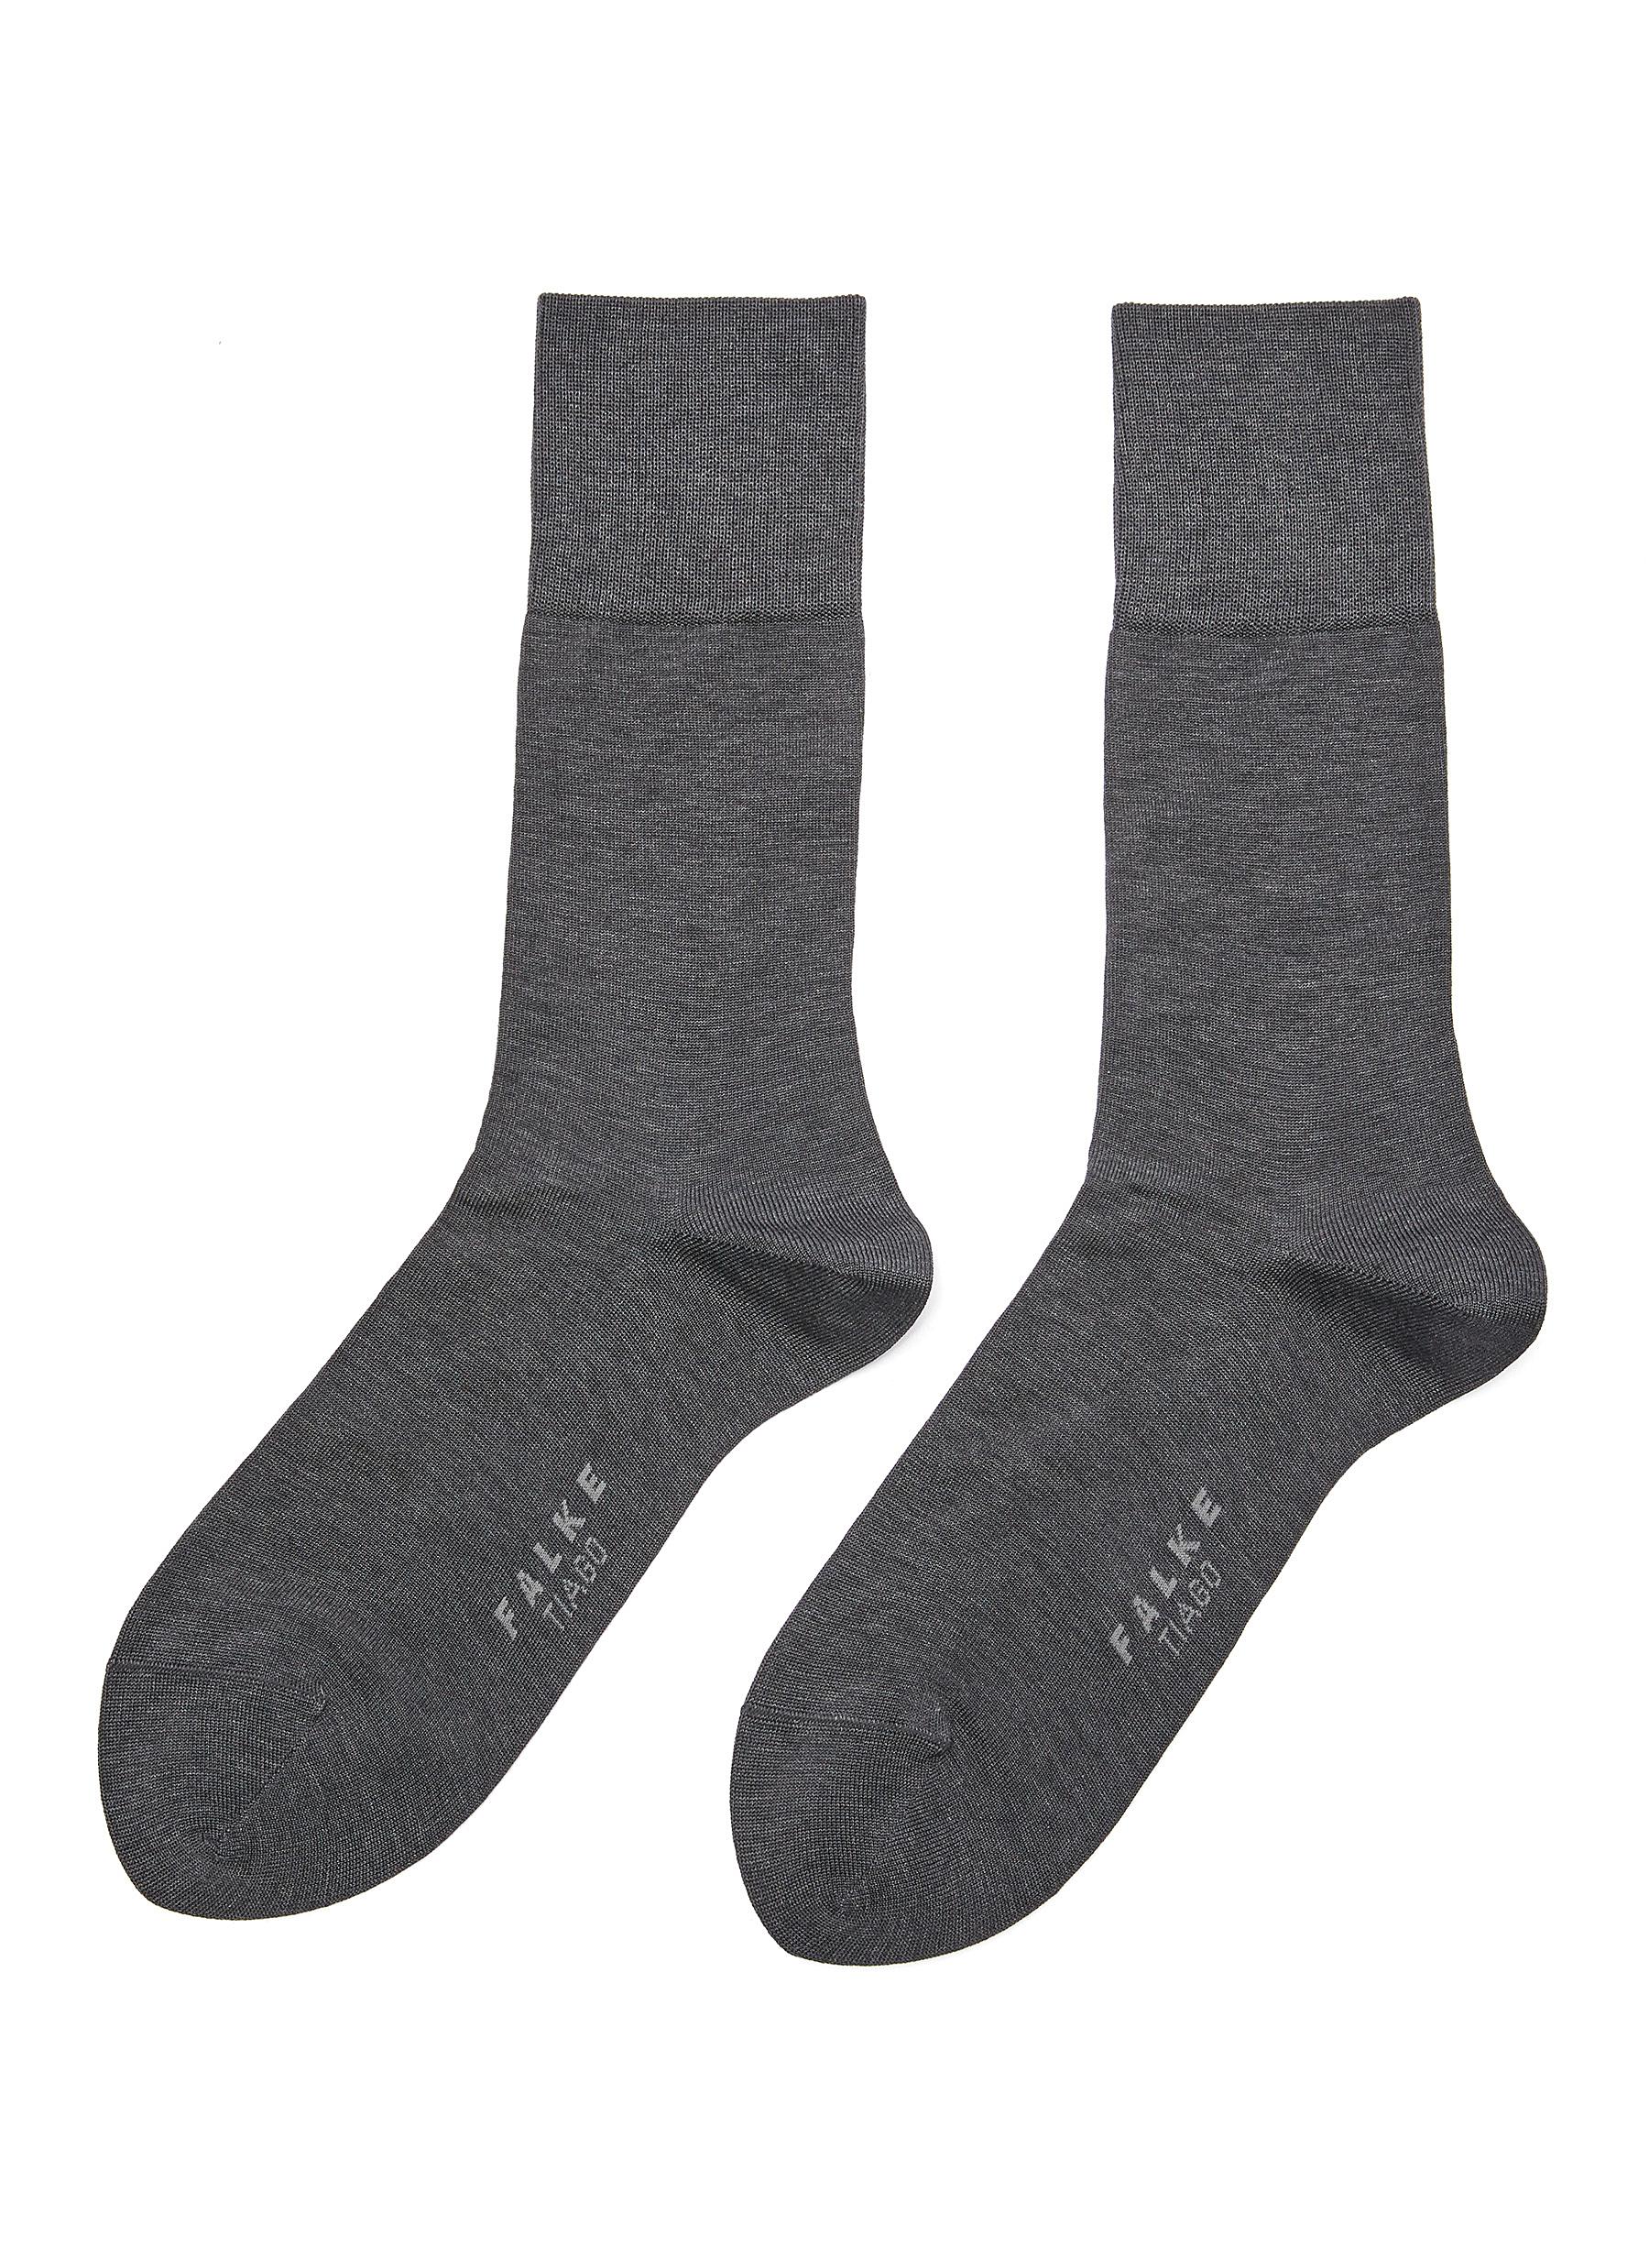 Tiago' cotton socks